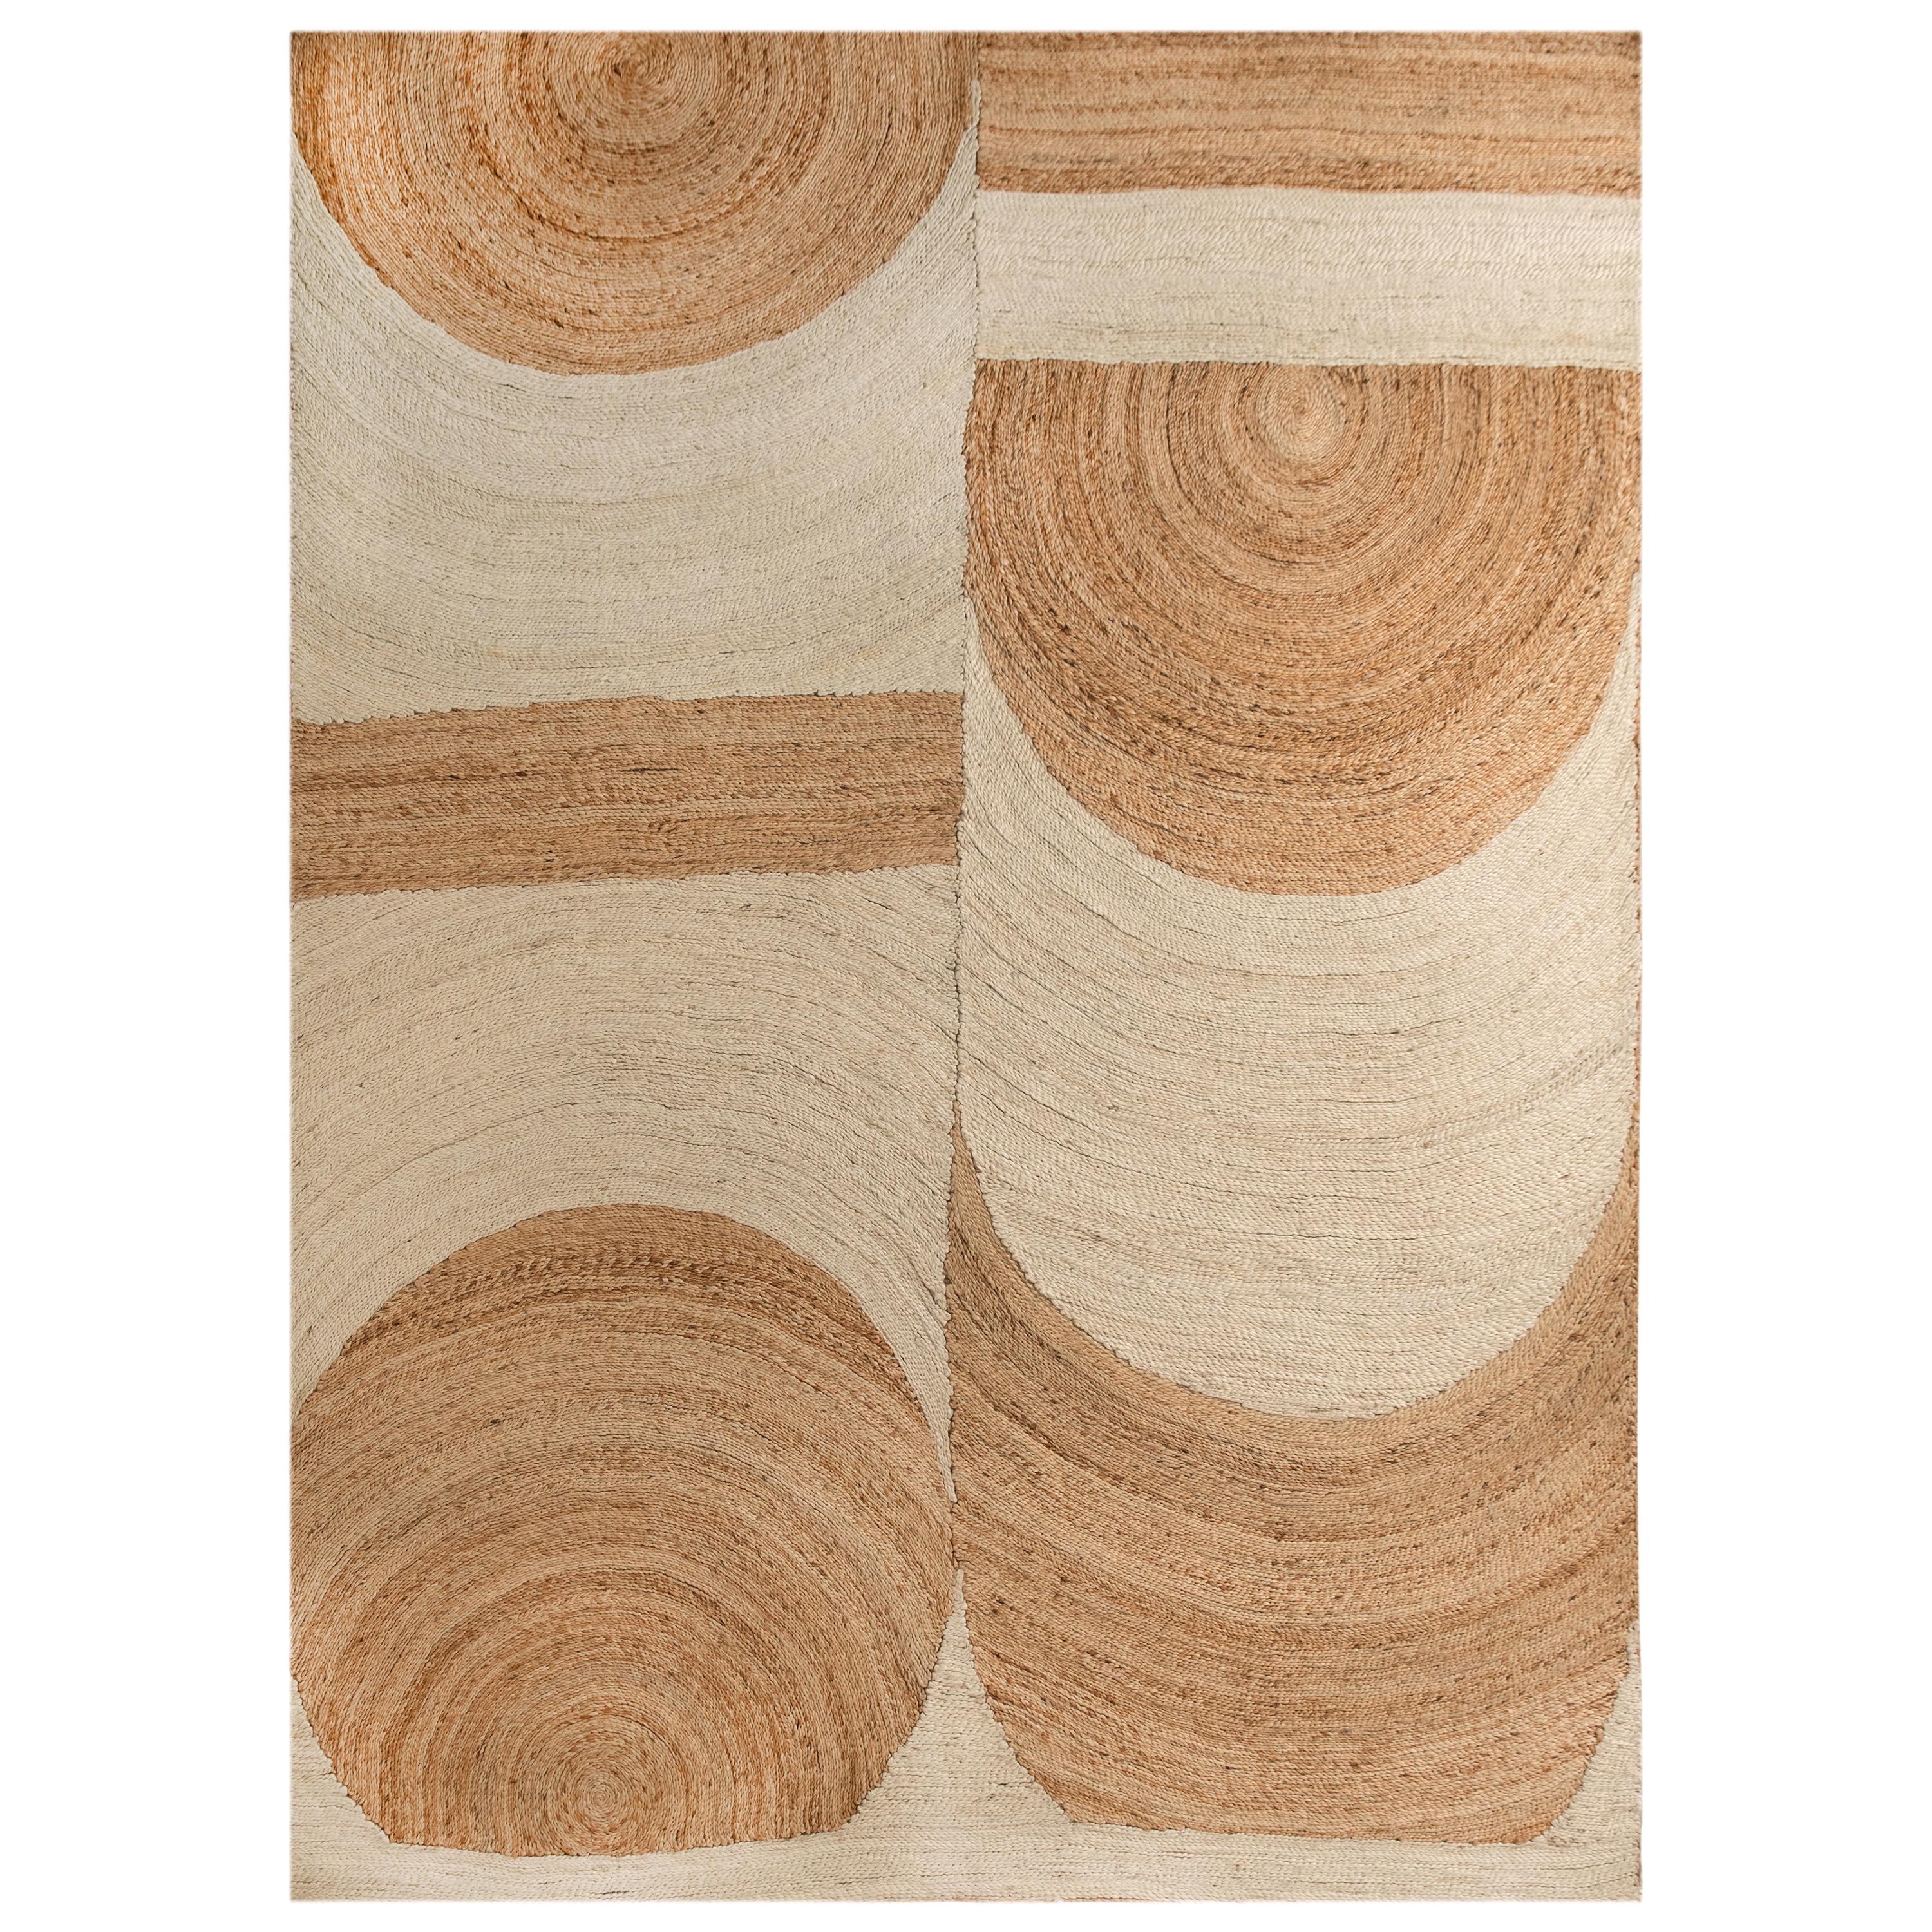 Modern Handweaved Jute Carpet Rug in Natural Brown Ivory Pac Man For Sale